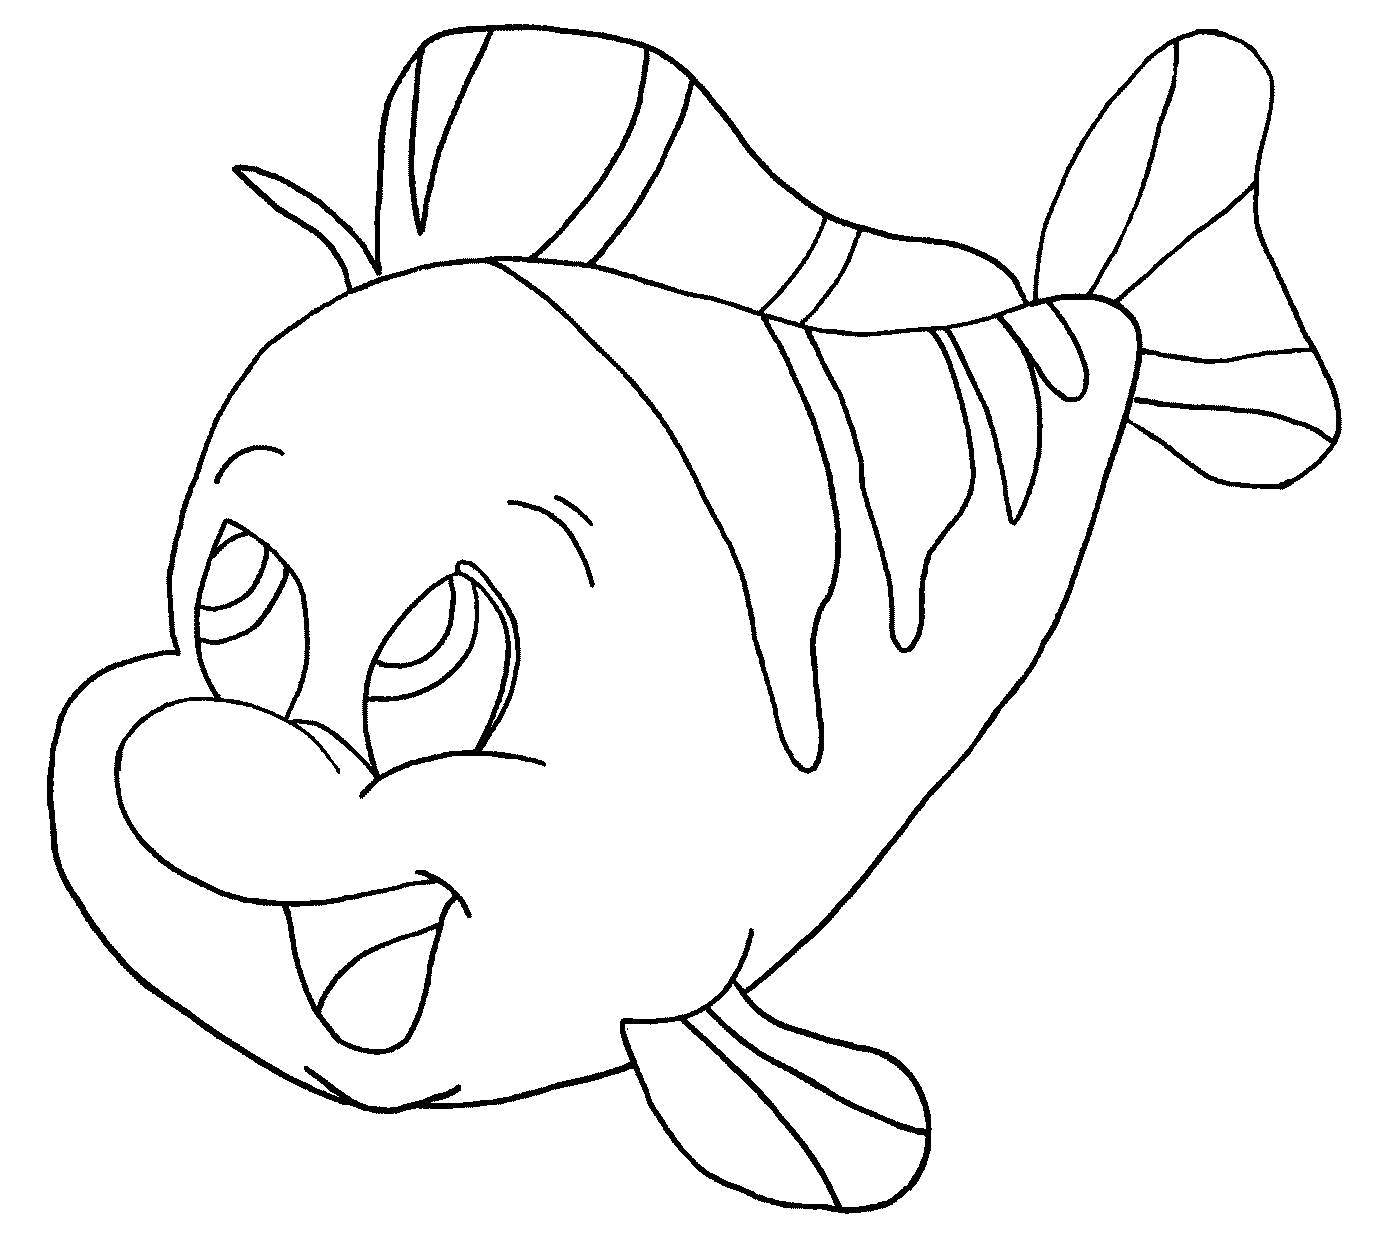 Coloring Fish flounder from the little mermaid cartoon . Category Disney cartoons. Tags:  Cartoon, fish, flounder, the little mermaid.